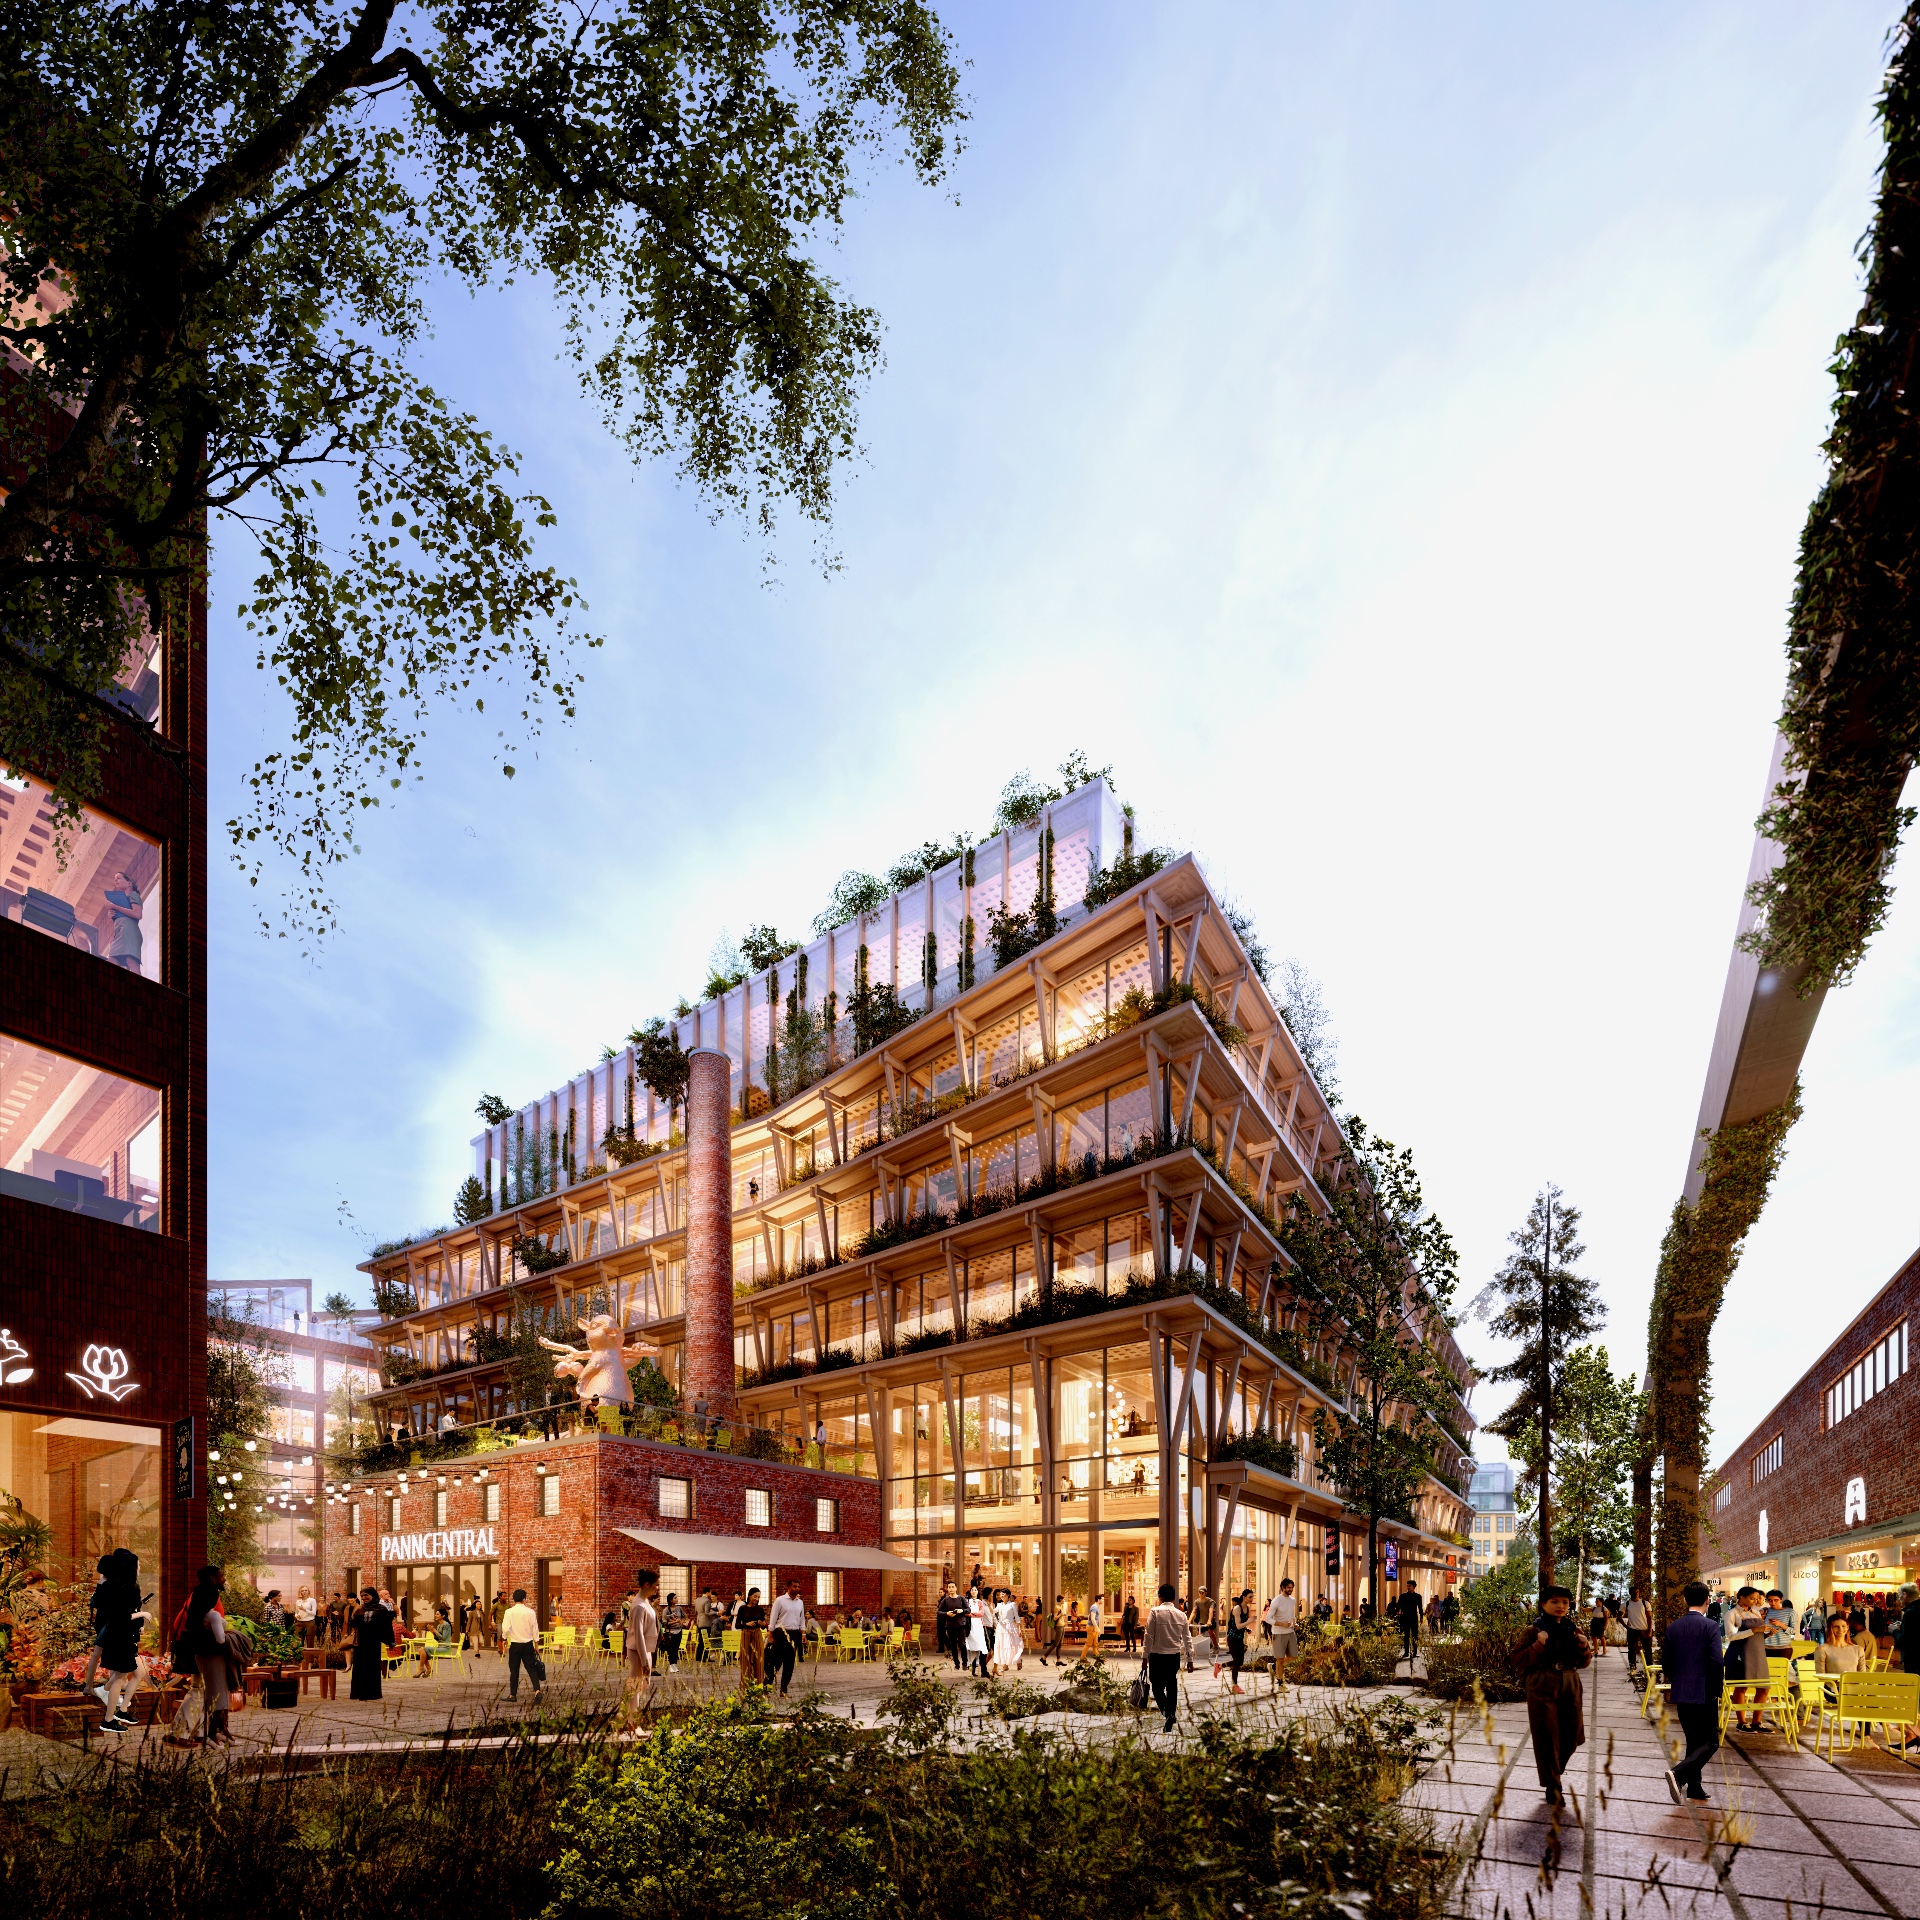 Stockholm Wood City: Η Σουηδία χτίζει τη μεγαλύτερη ξύλινη πόλη στον κόσμο - Η βιώσιμη κατασκευή ξεκινά το 2025